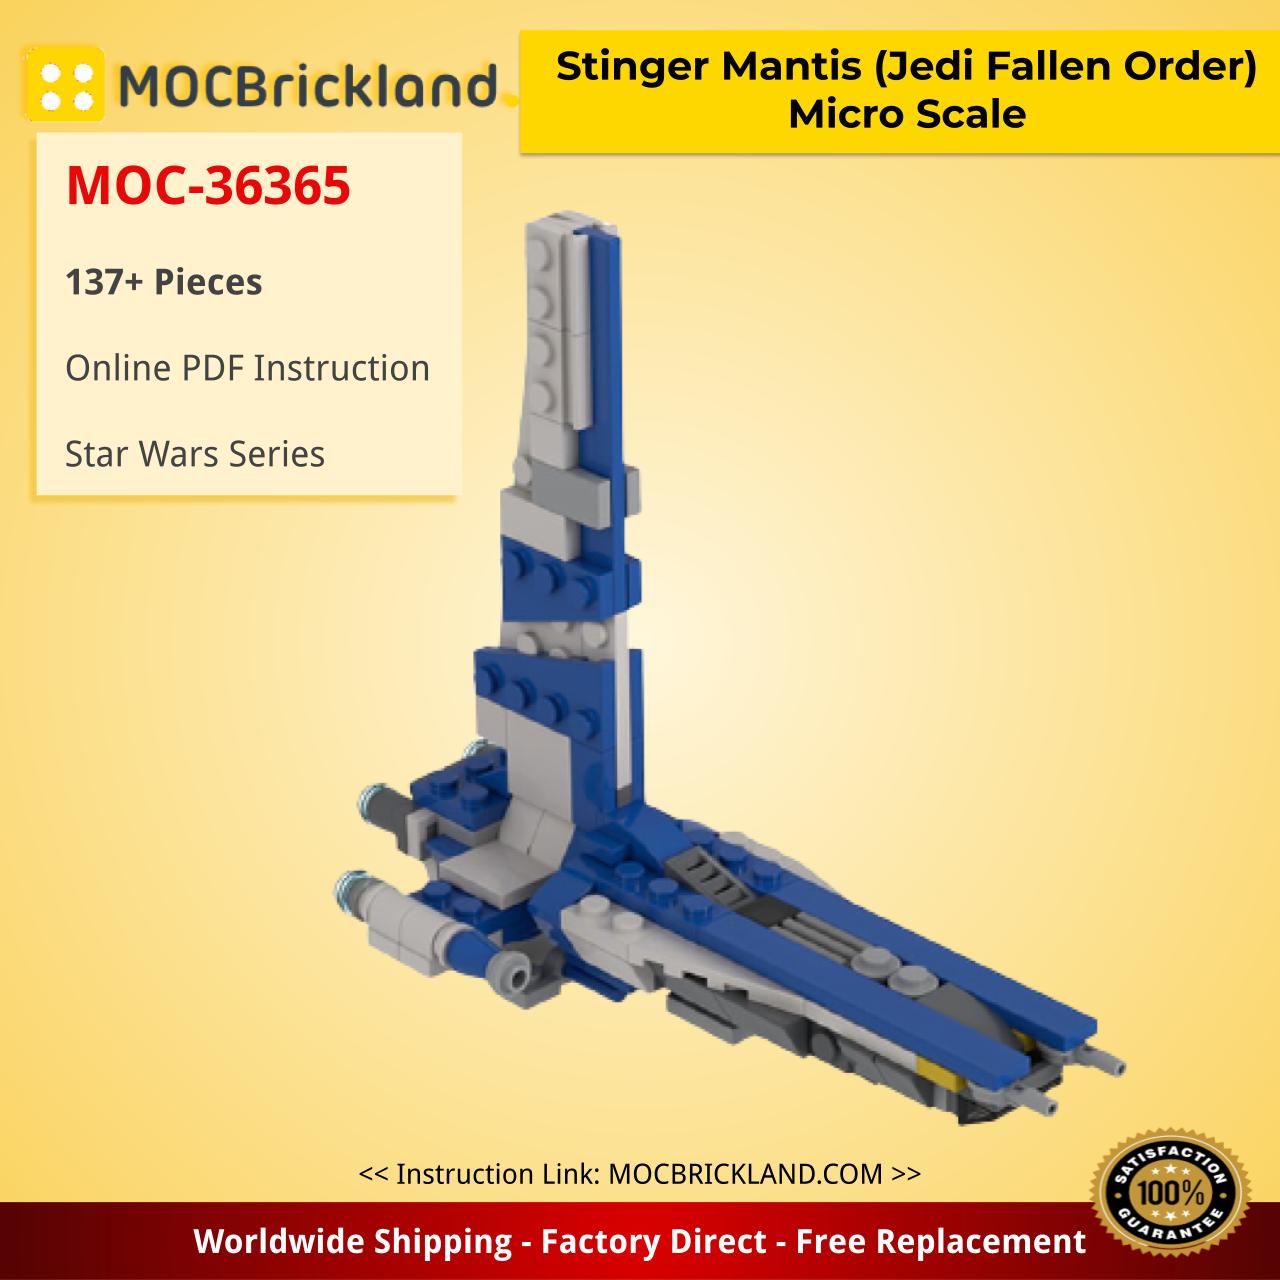 star wars moc 36365 stinger mantis jedi fallen order micro scale by 2bricksofficial mocbrickland 3445